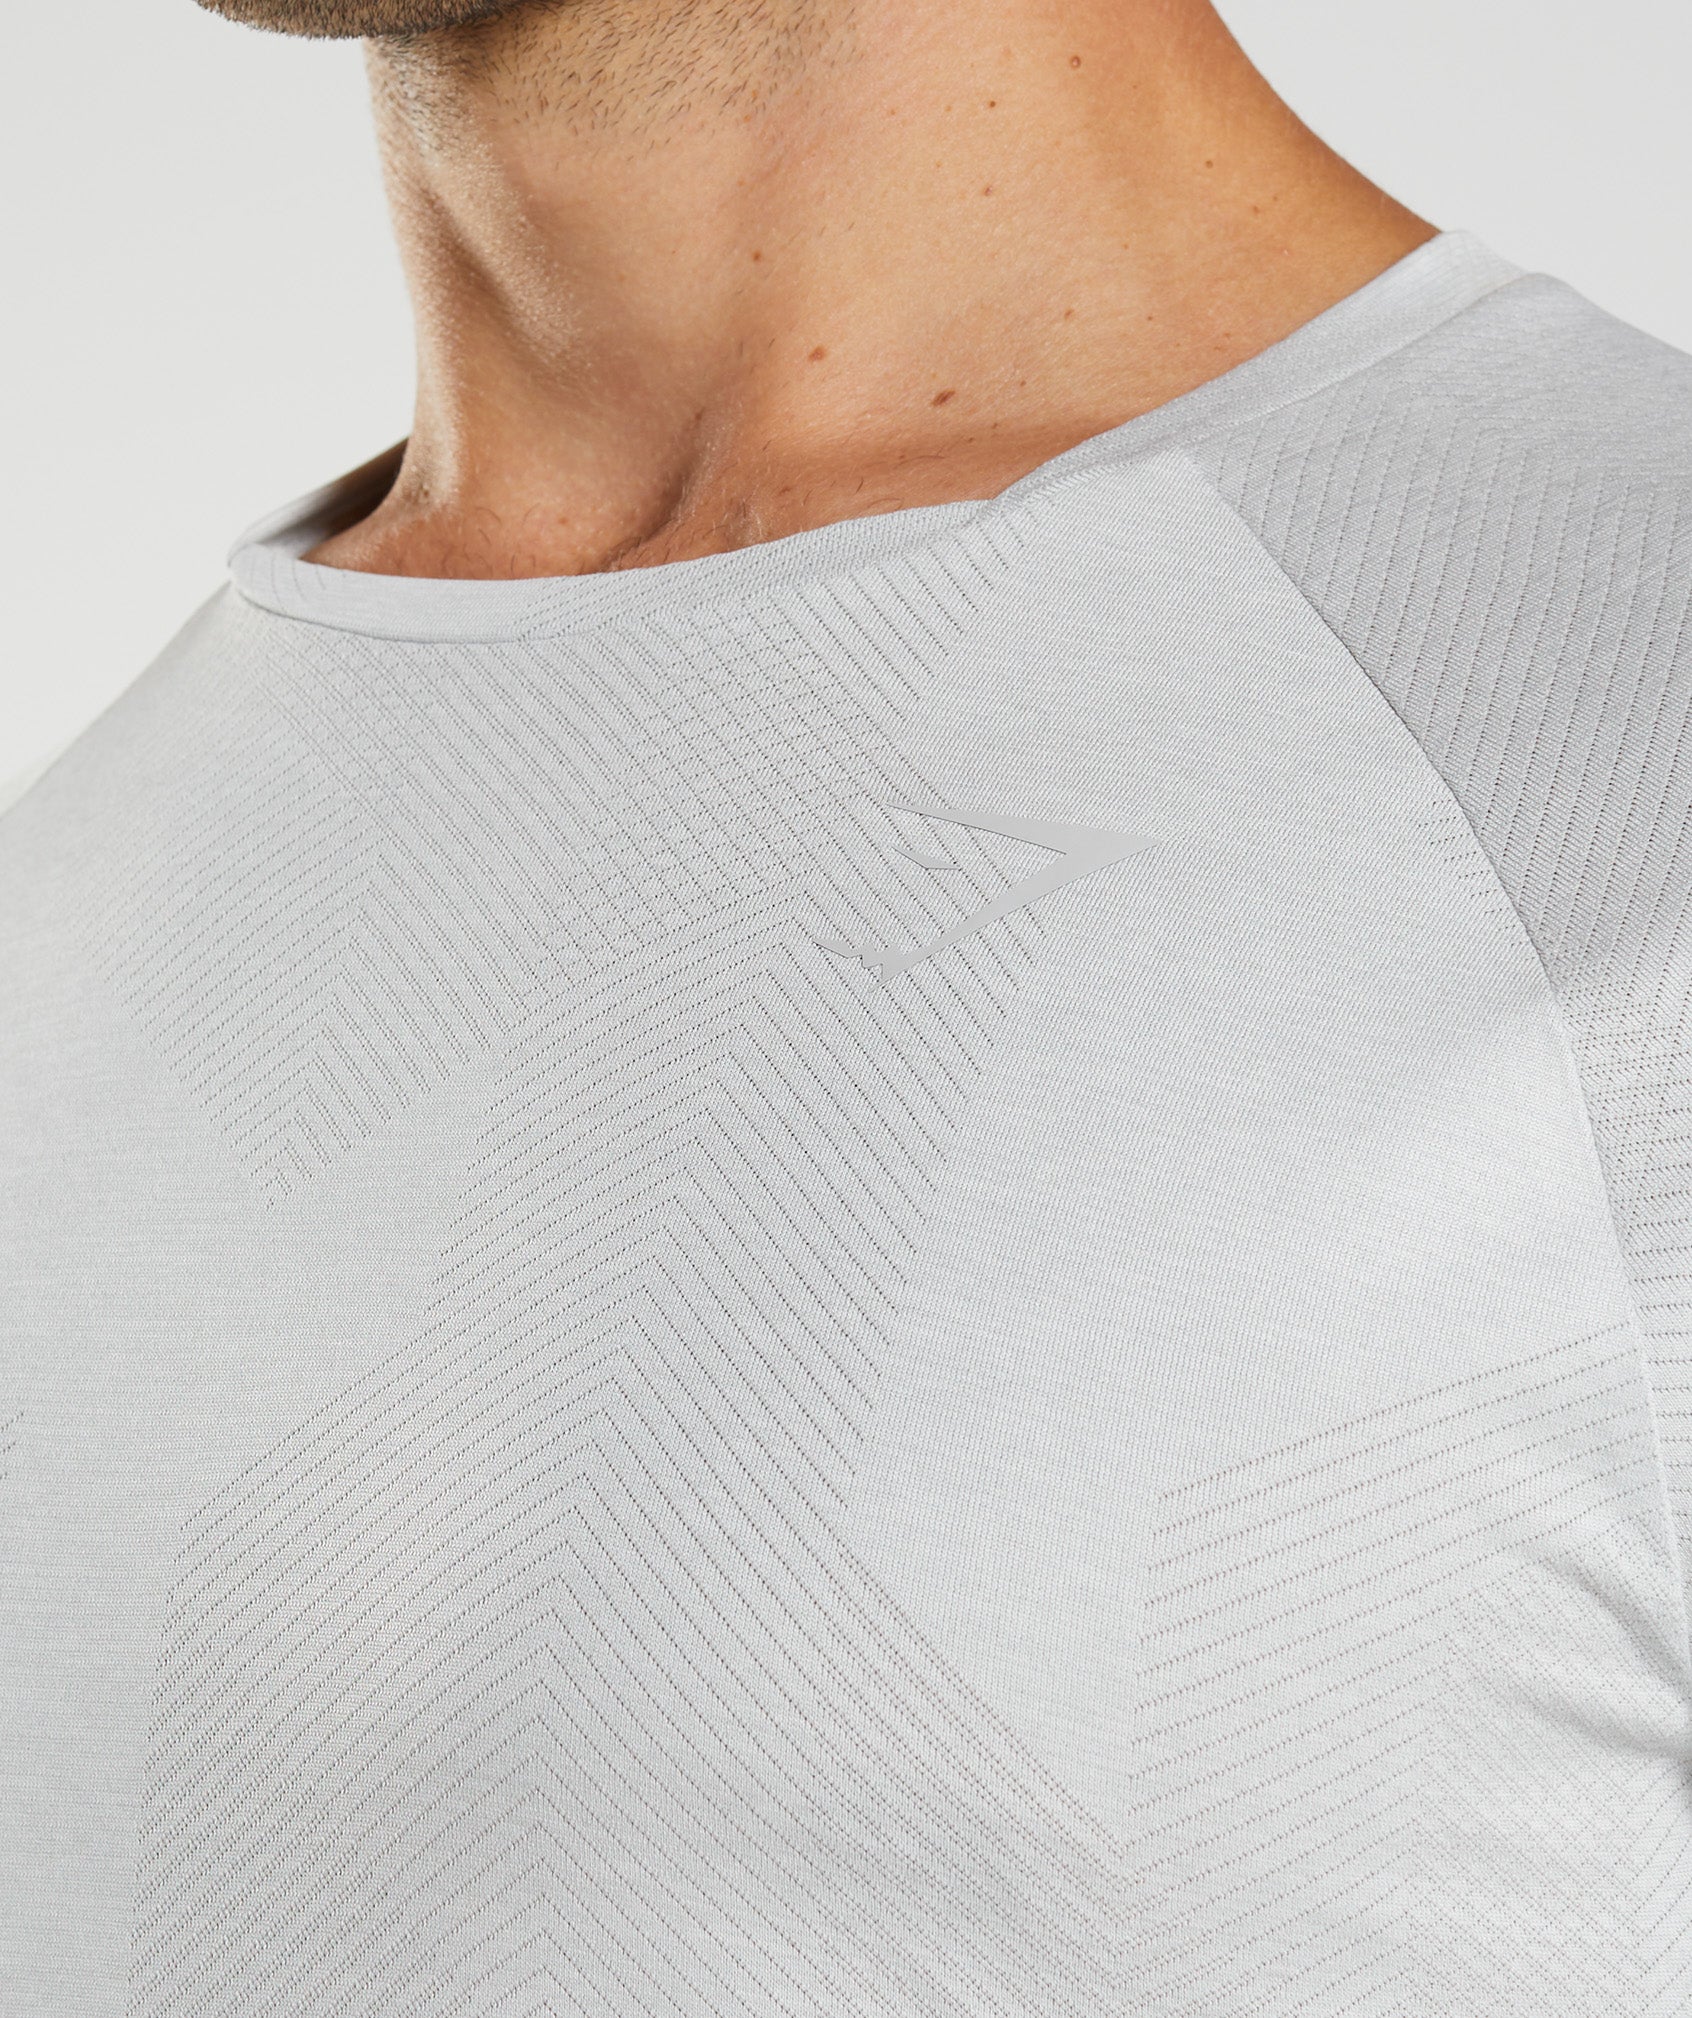 Apex Long Sleeve T-Shirt